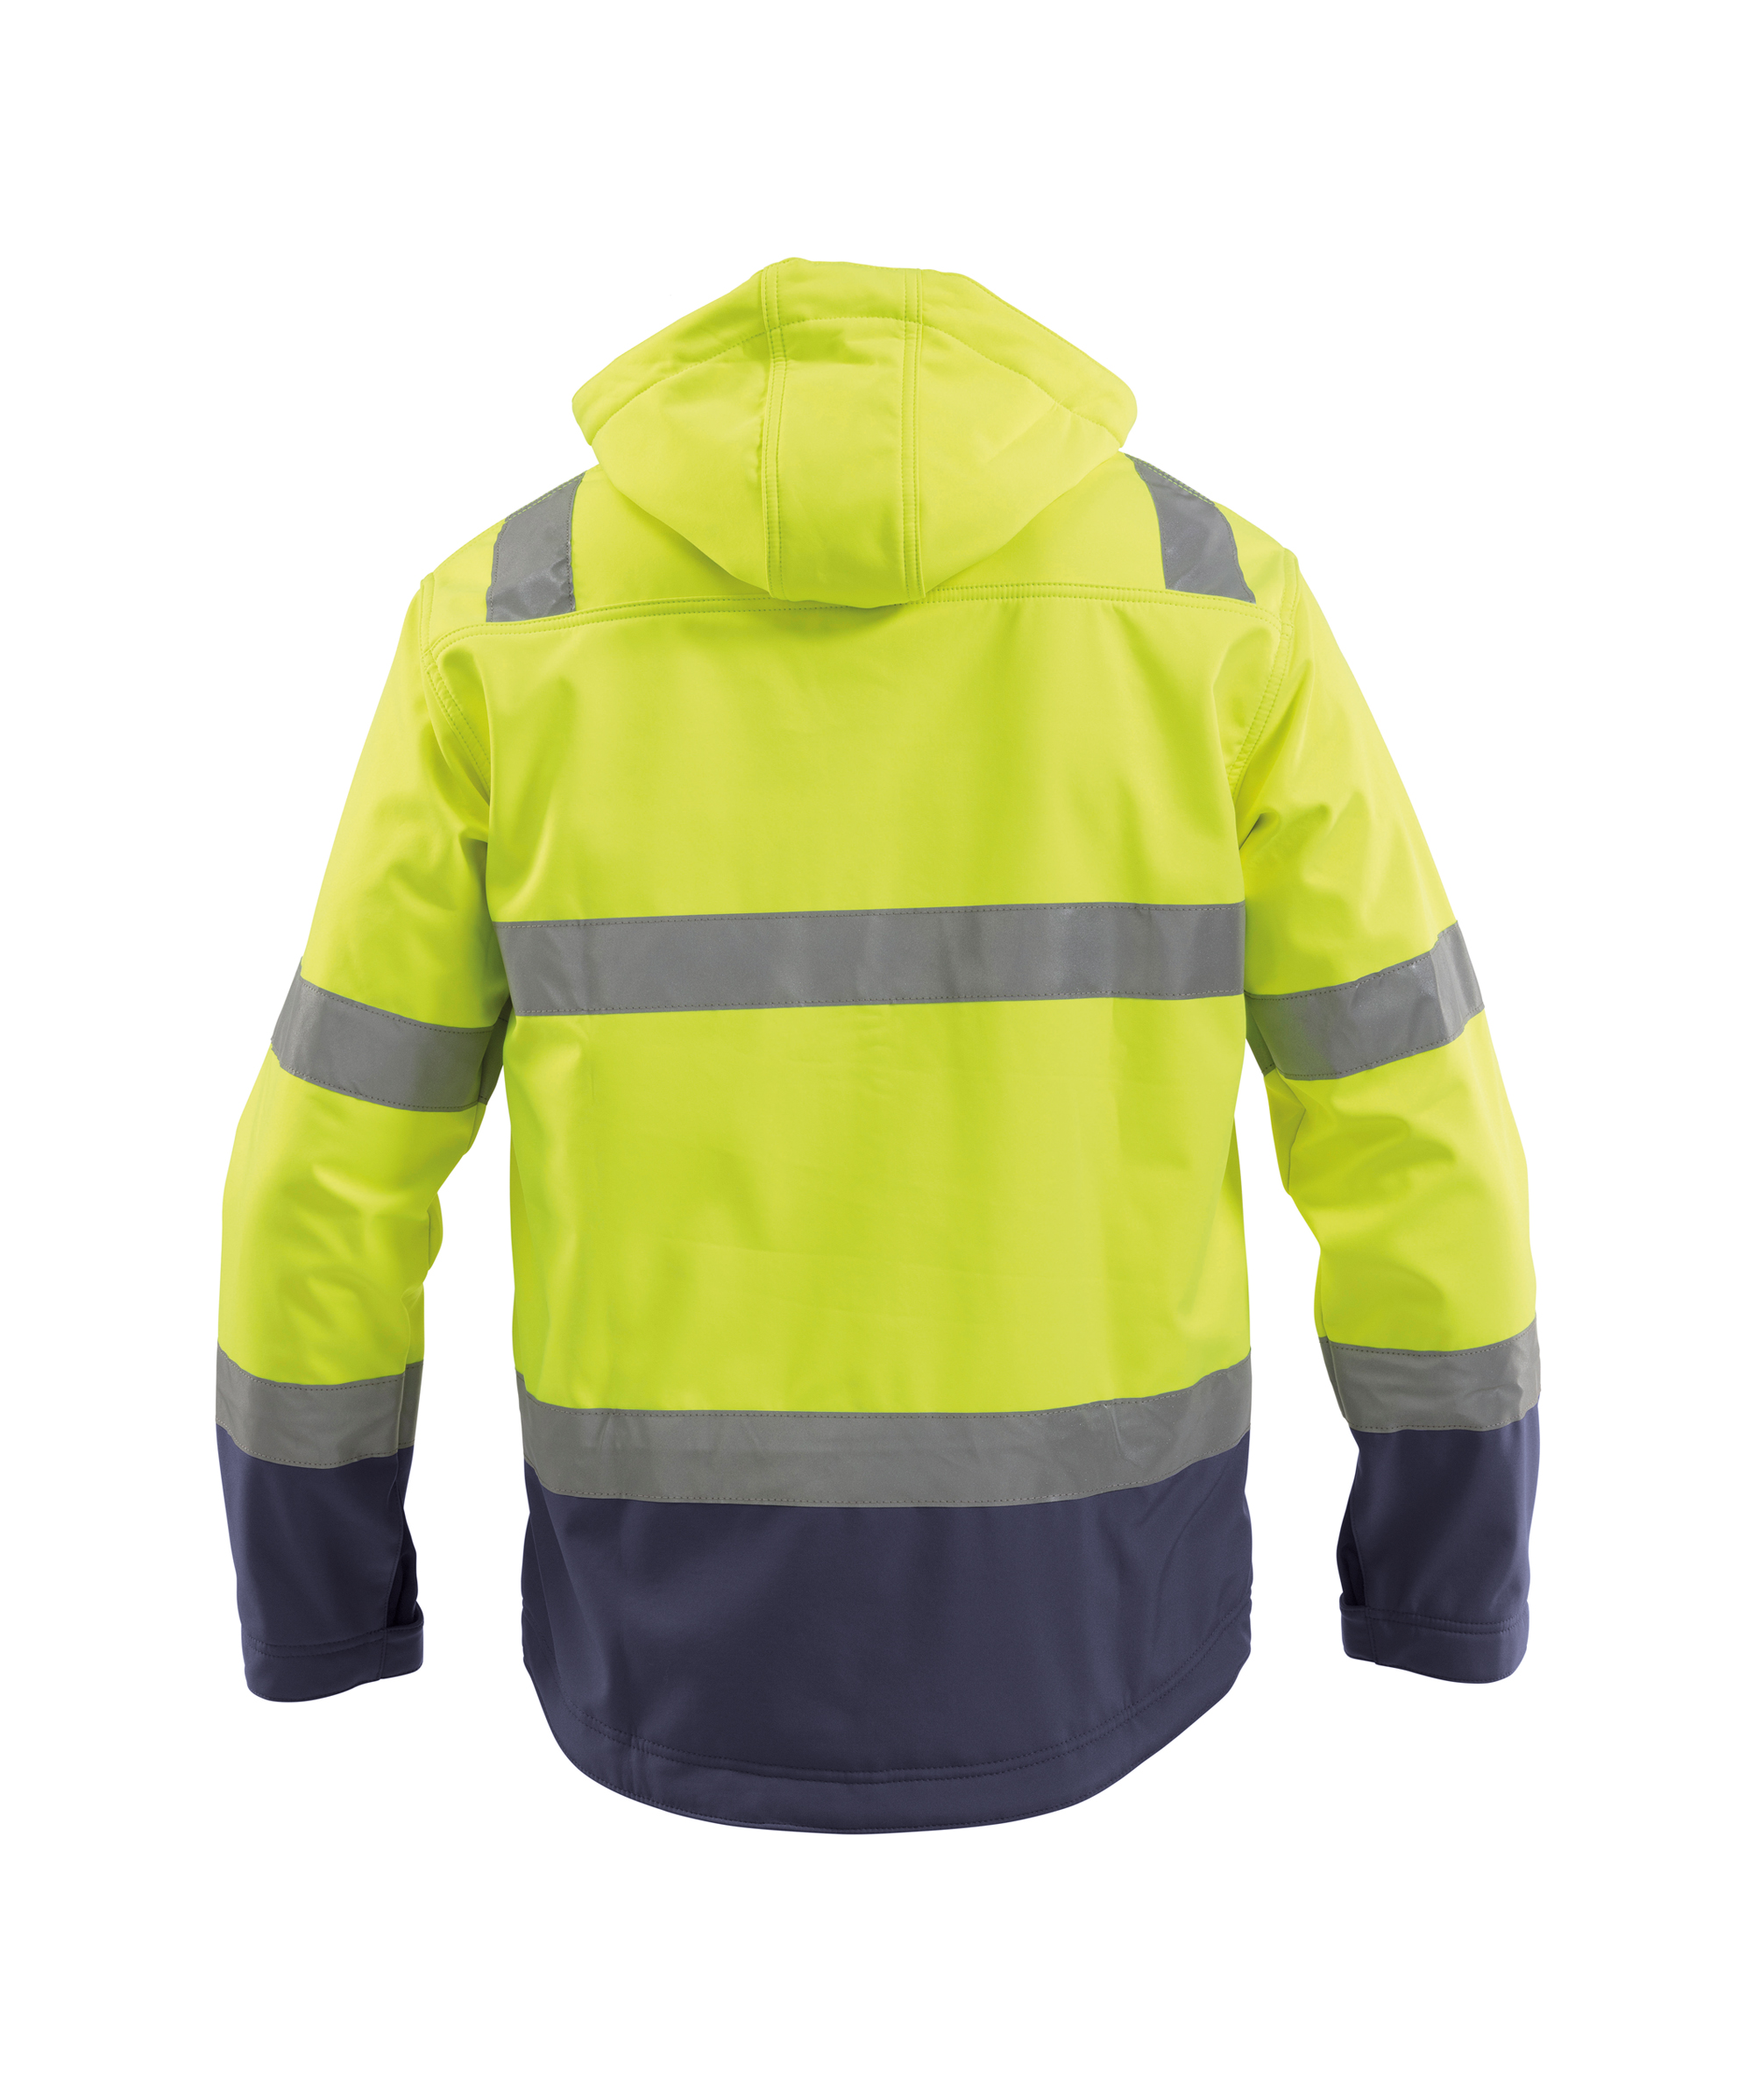 malaga_high-visibility-softshell-work-jacket_fluo-yellow-navy_back.jpg